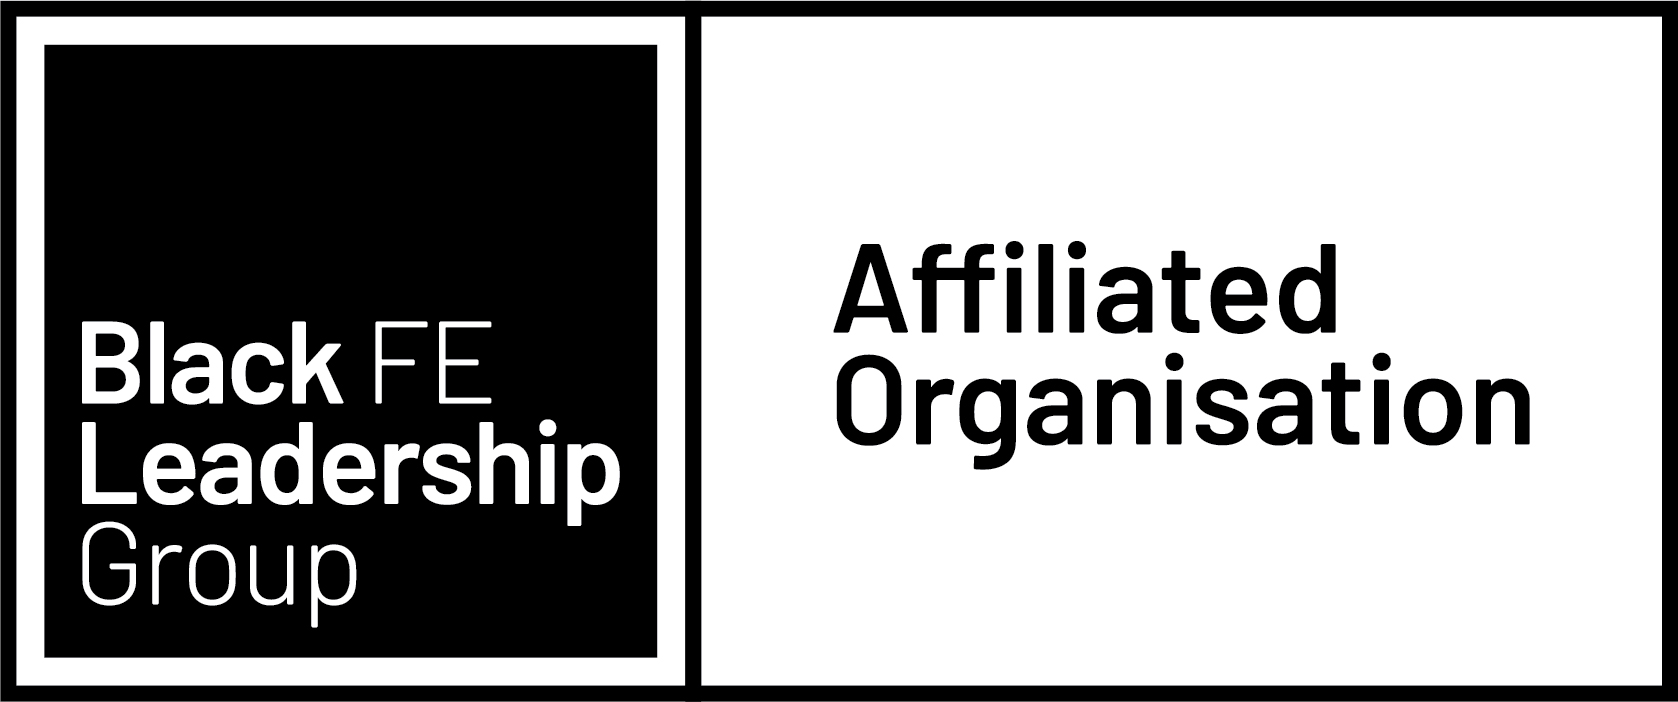 BFELG_Affiliated Organisation_WhiteBG